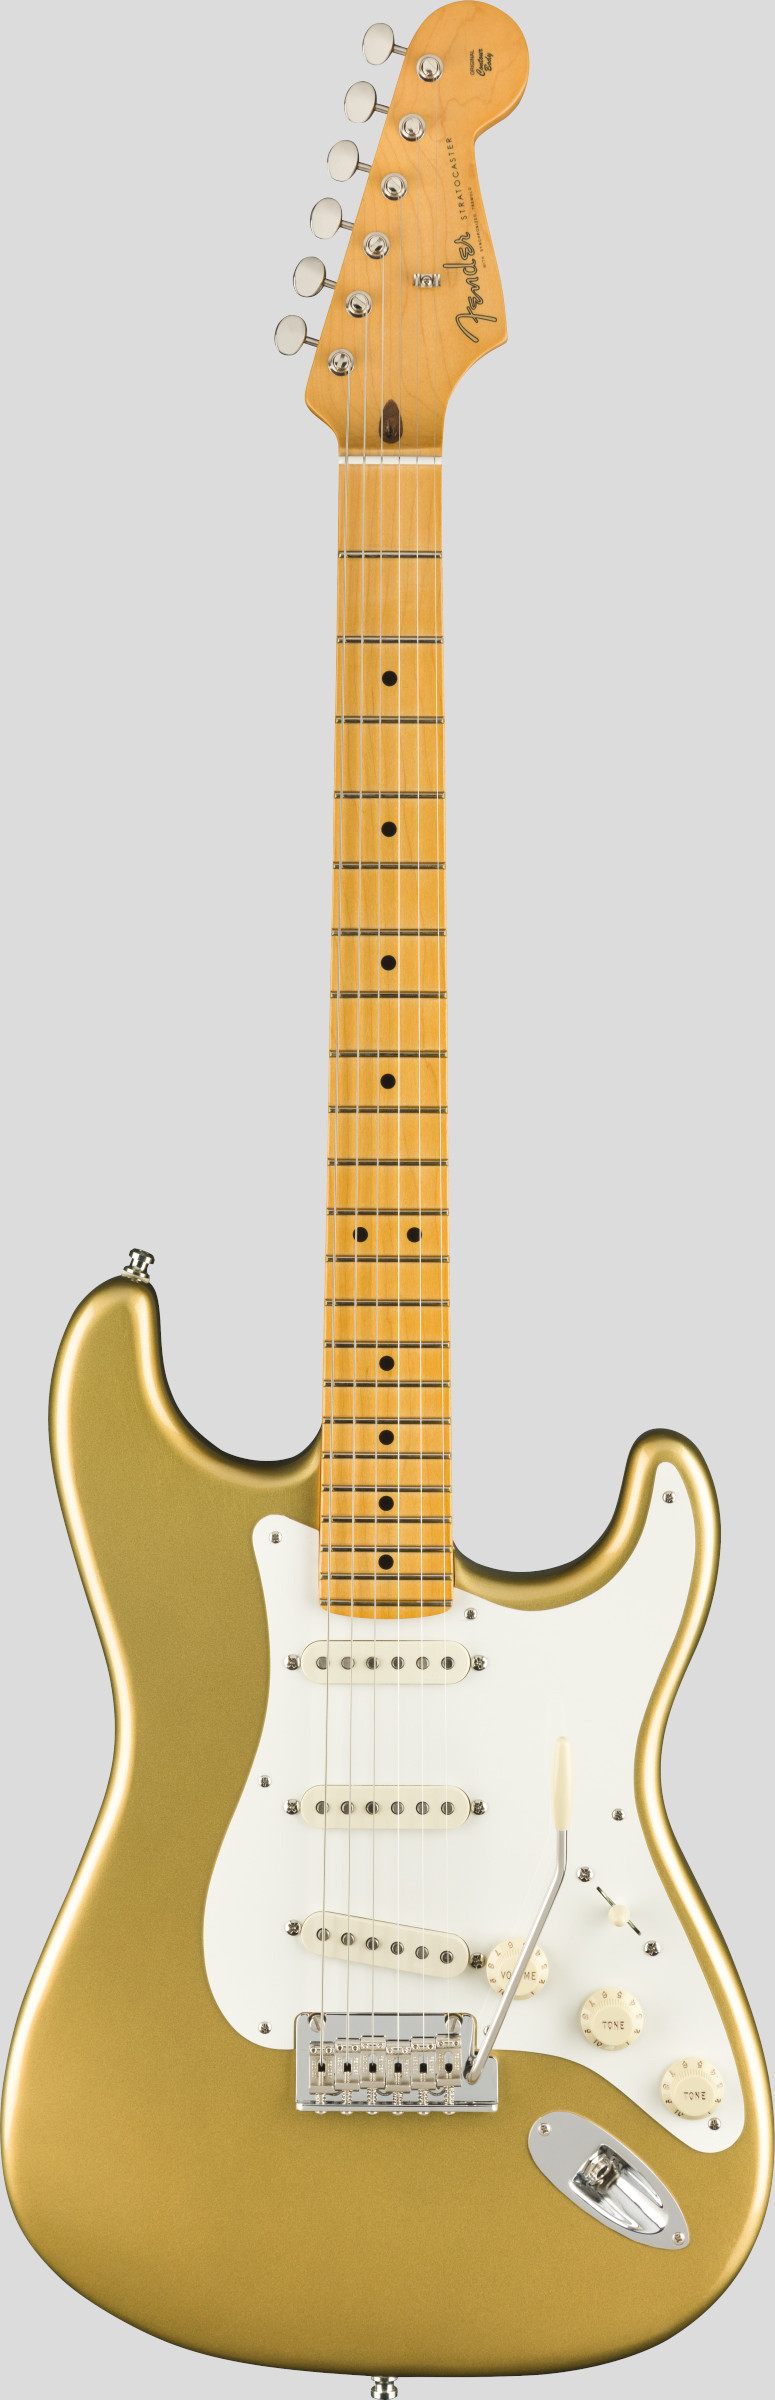 Fender Lincoln Brewster Stratocaster Aztec Gold 1